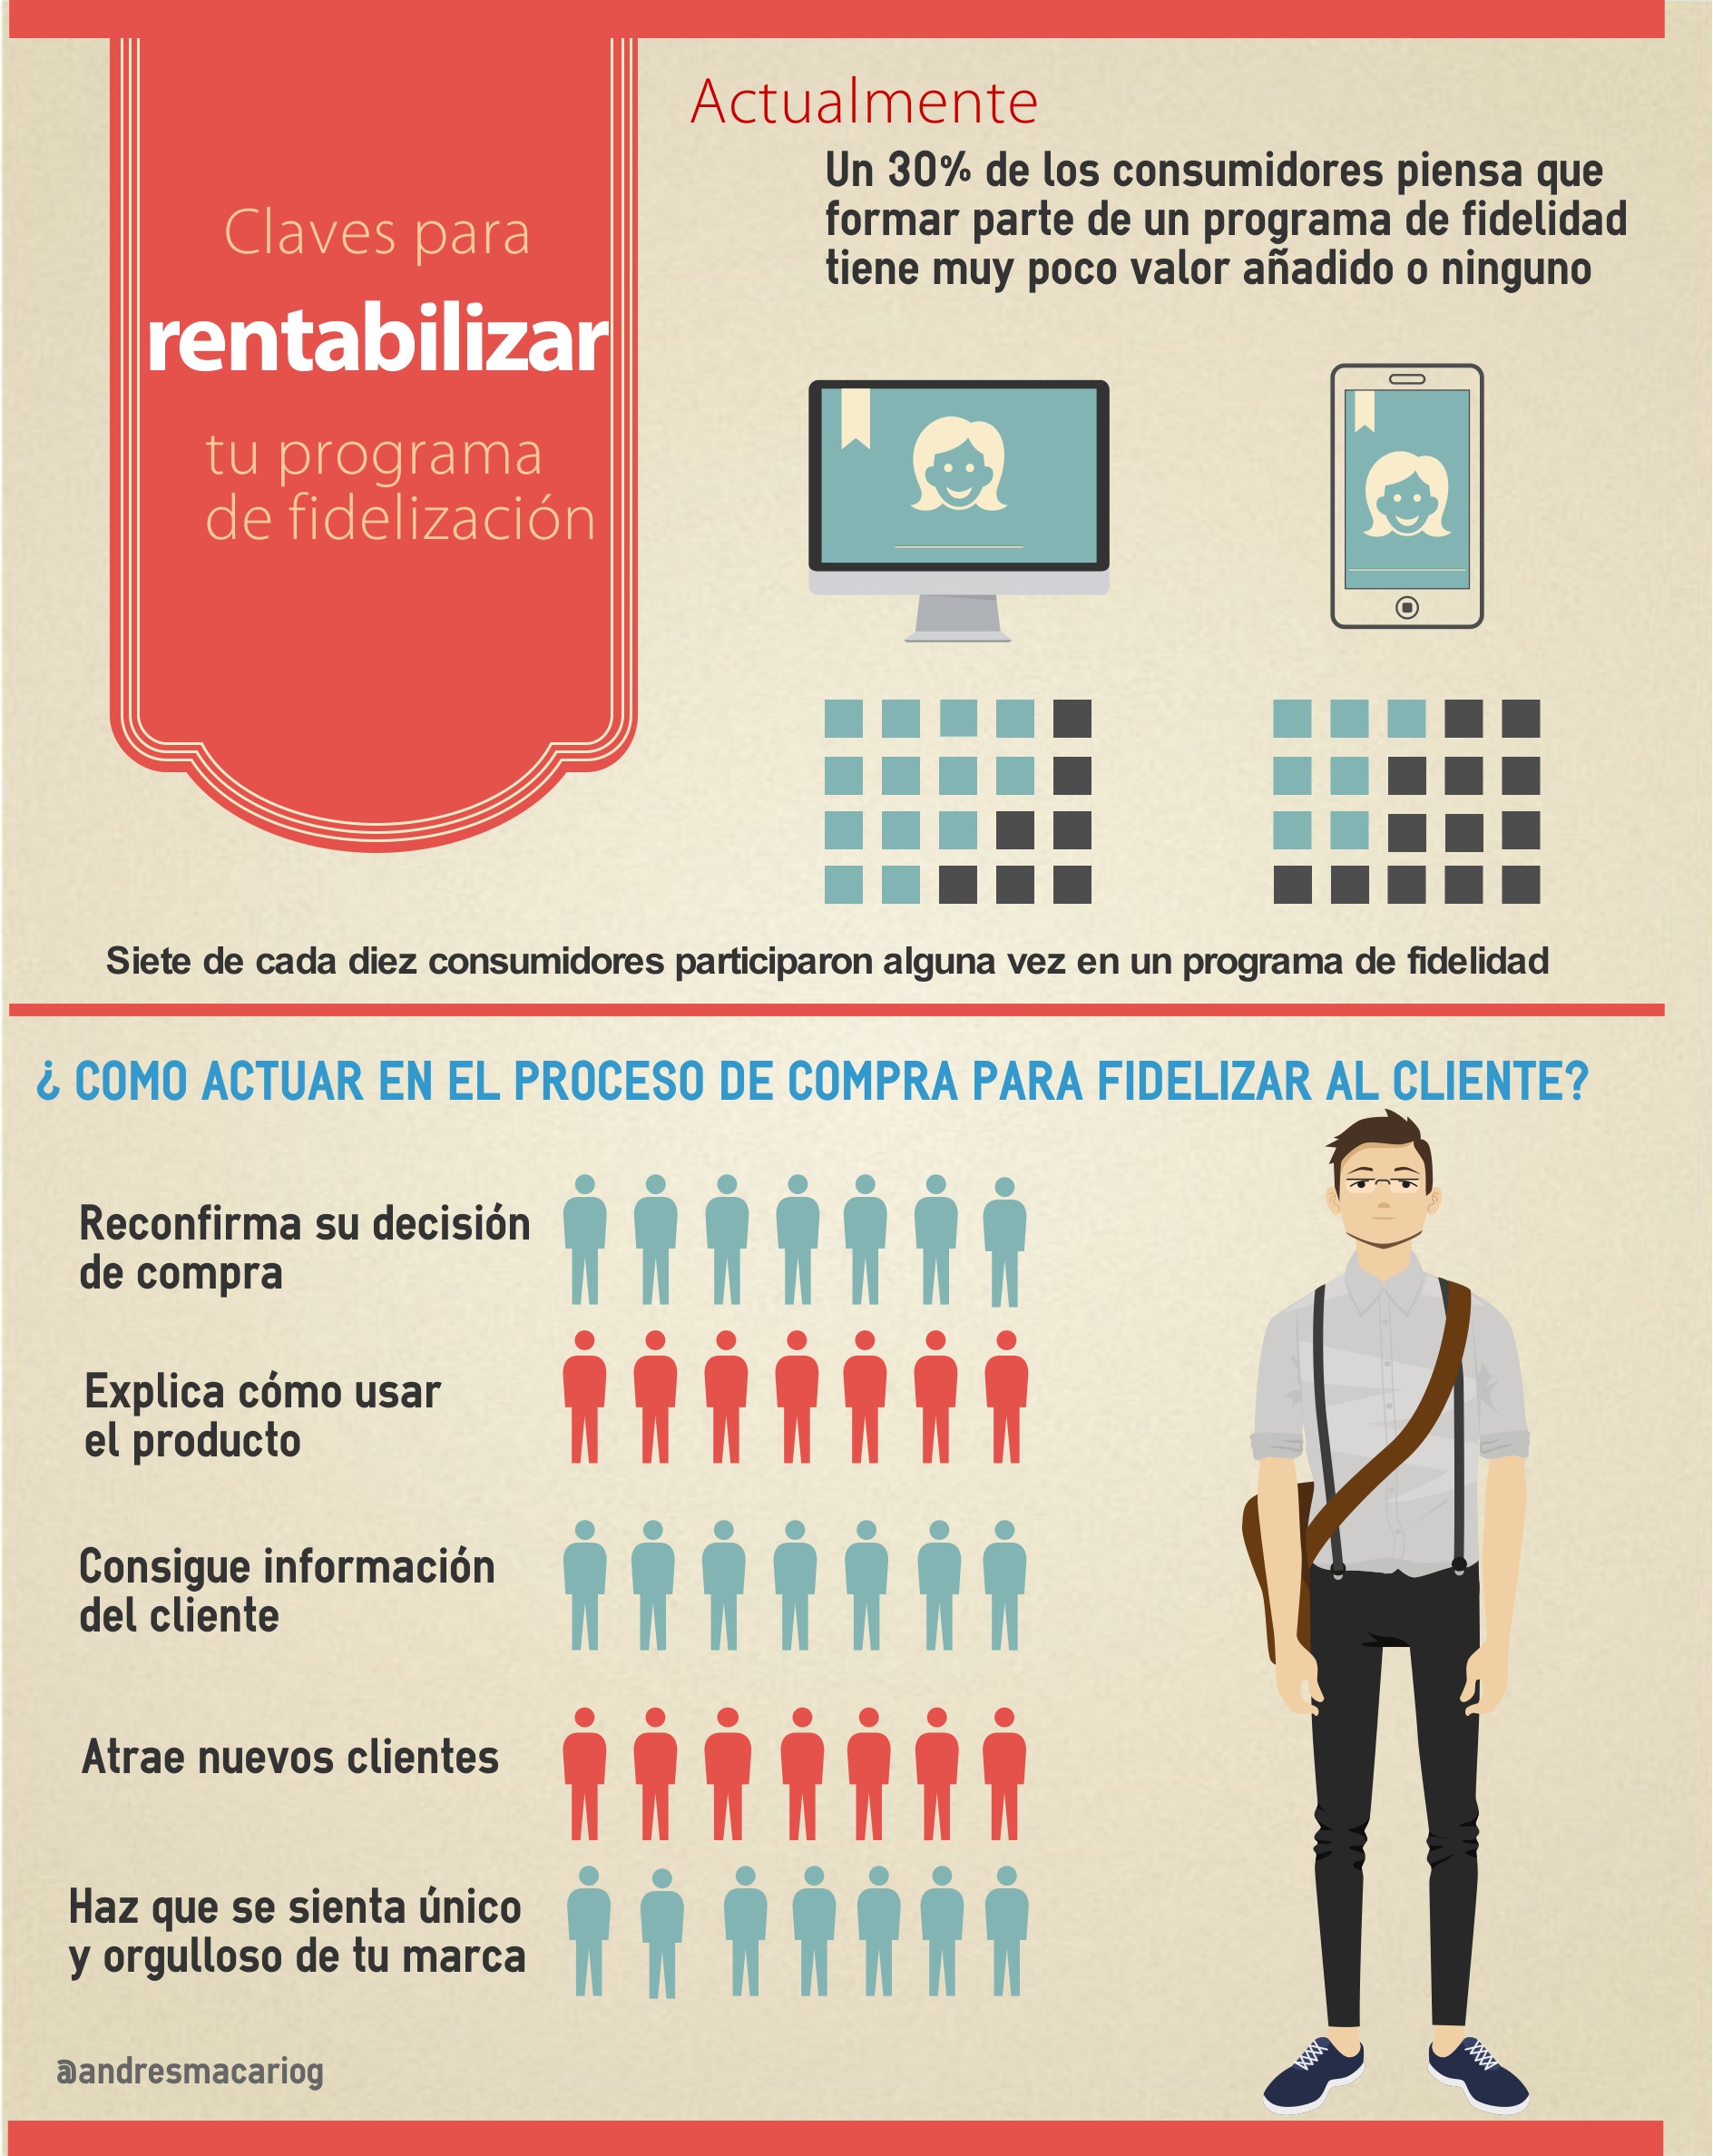 Claves-para-rentabilizar-programa-fidelizacion-Infografia-Andres-Macario